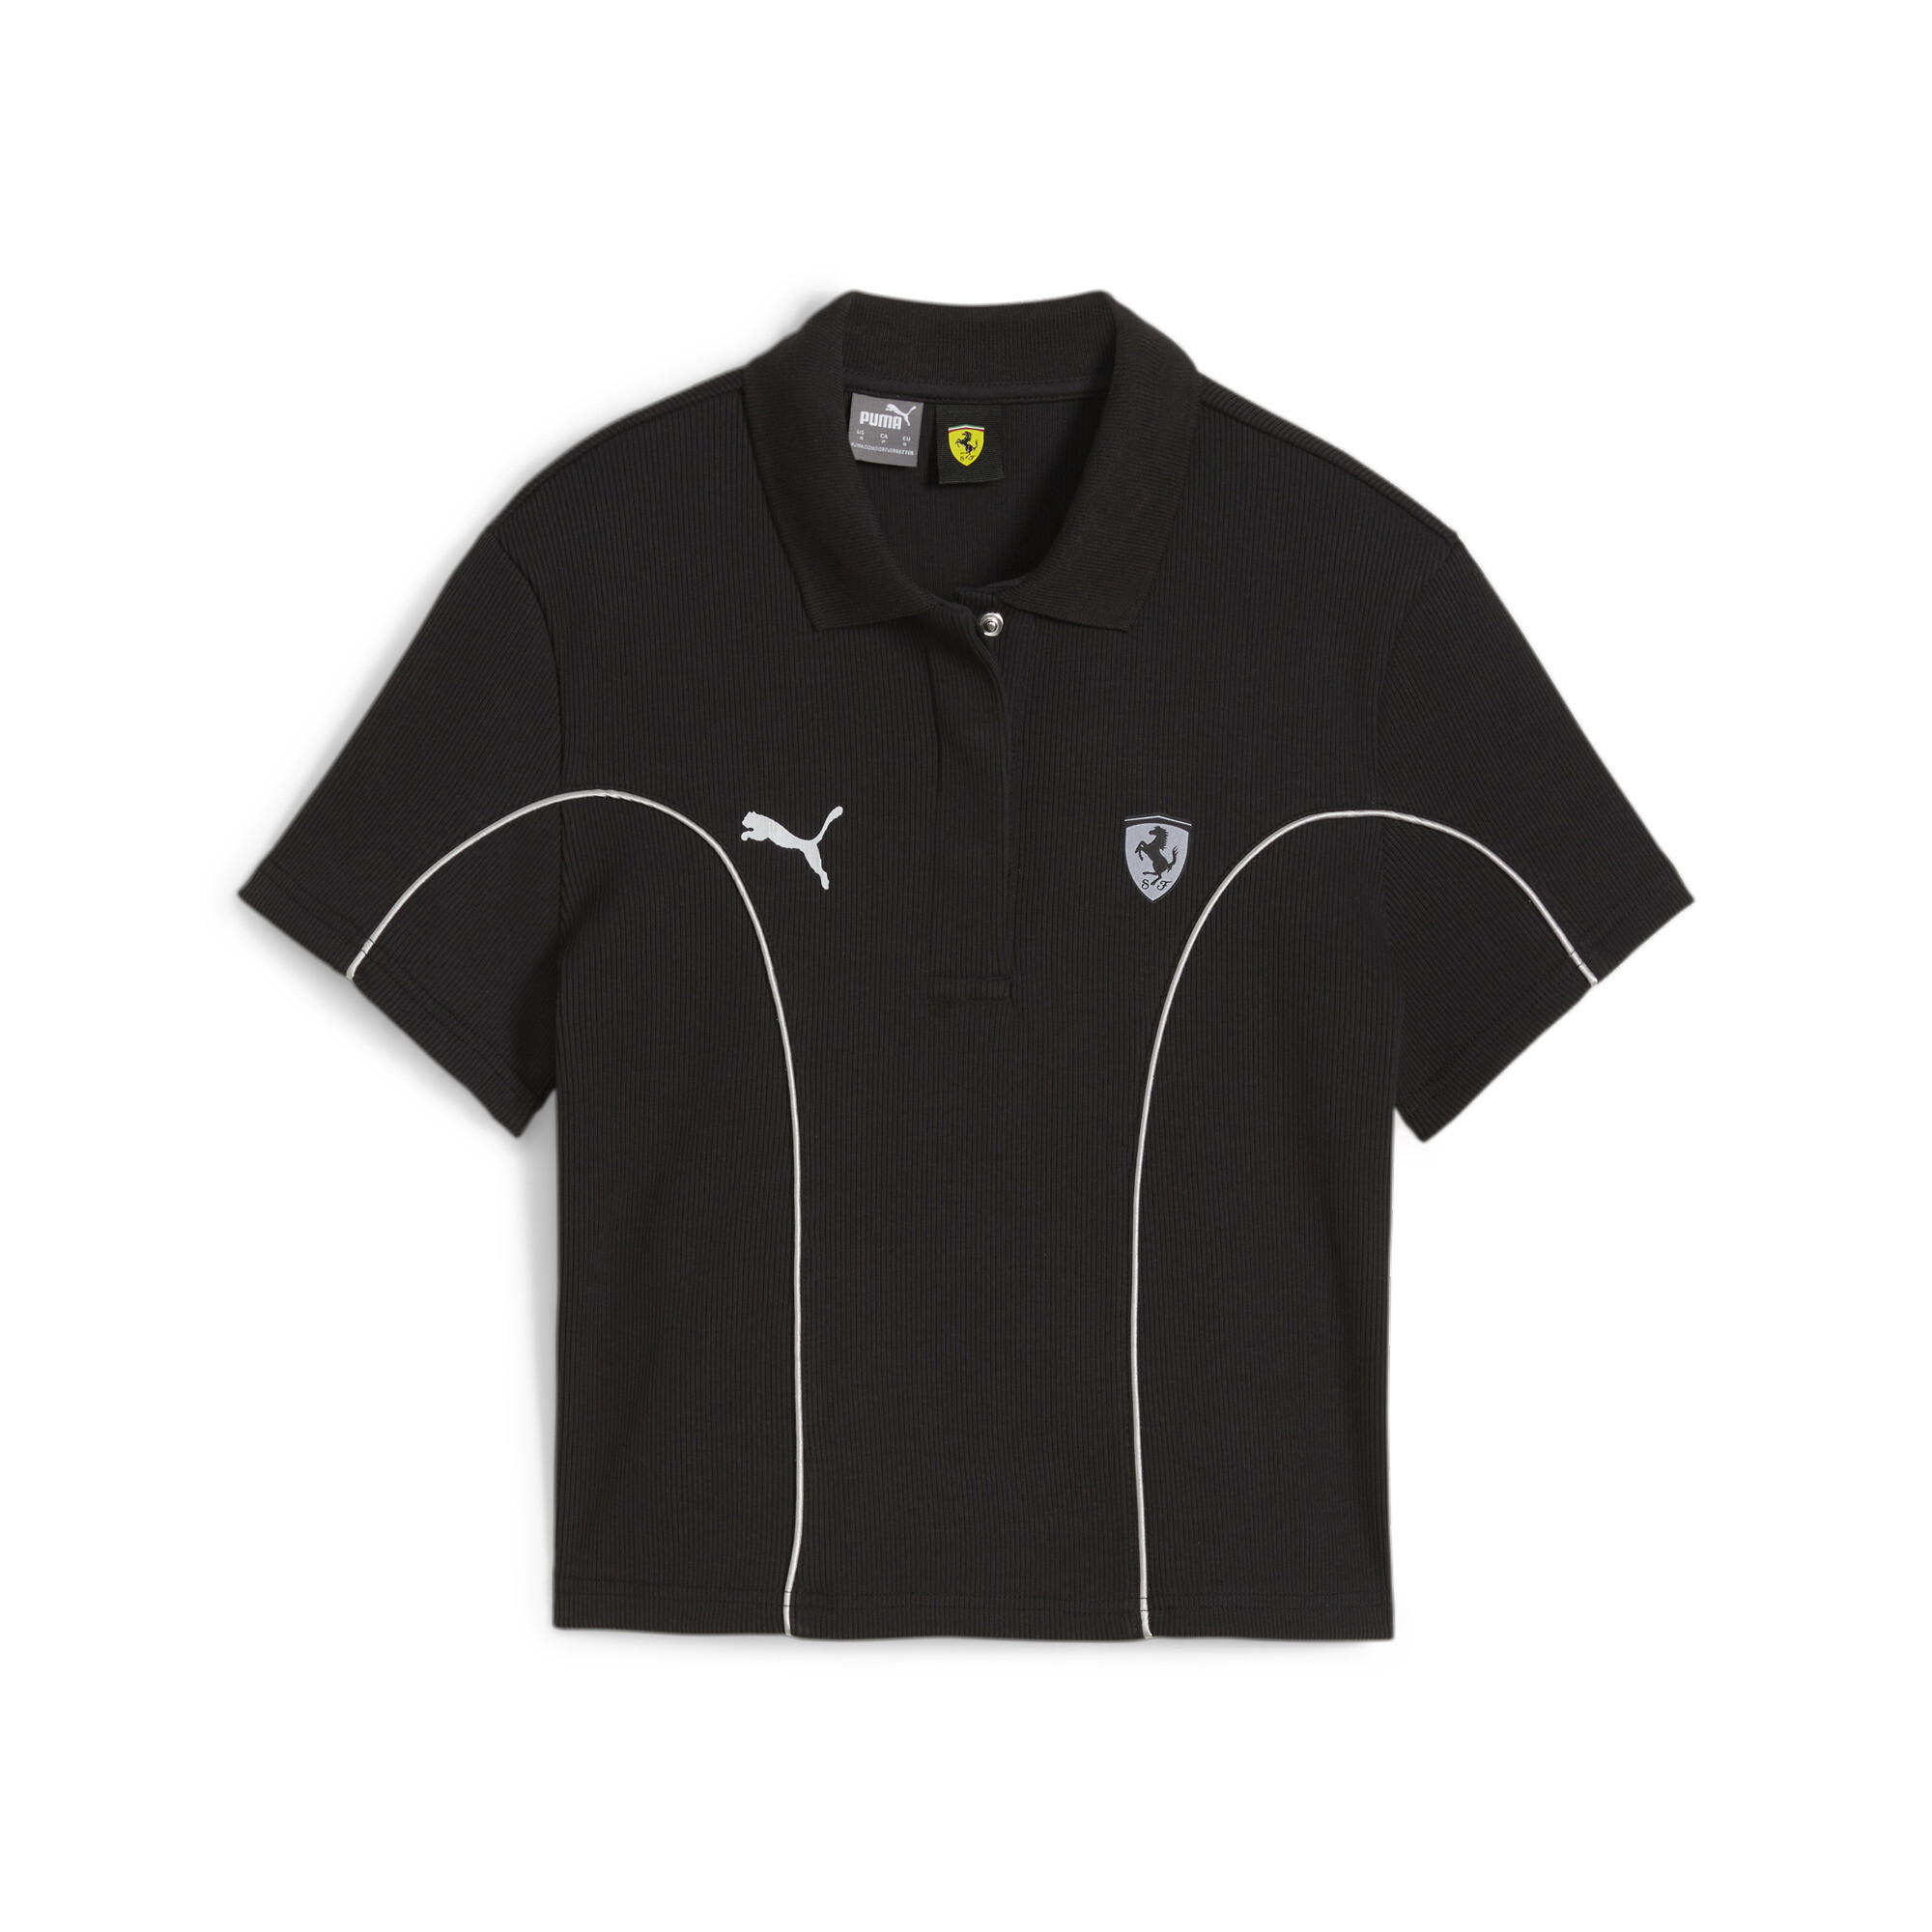 Women's Puma Scuderia Ferrari Style's Motorsport Polo T-Shirt, Black T-Shirt, Size M T-Shirt, Clothing